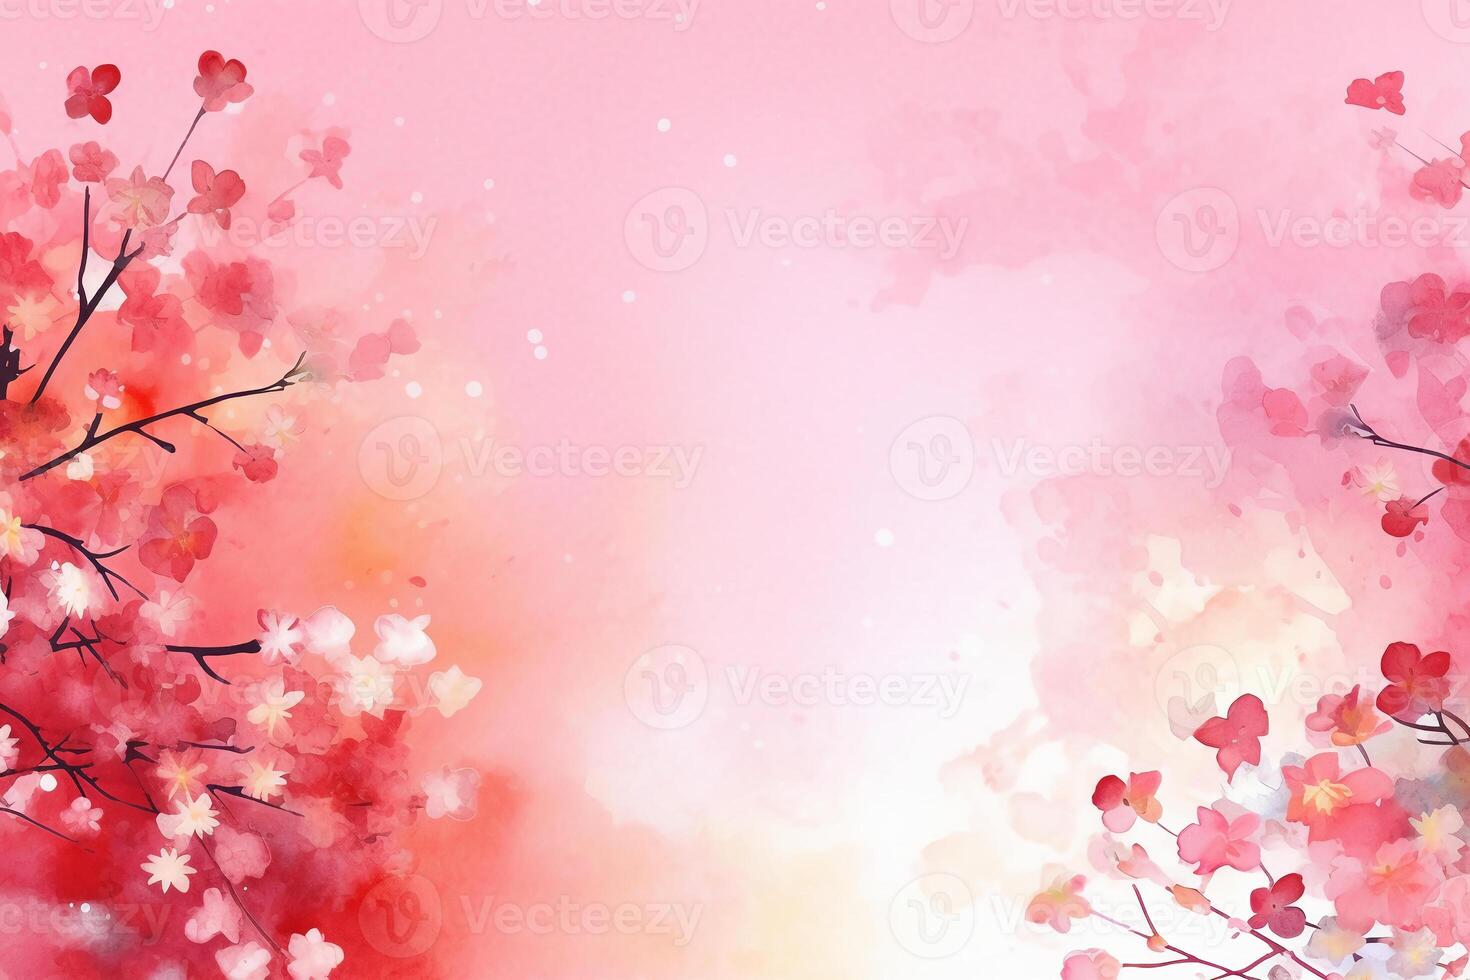 luz Rosa fundo papel textura minúsculo pétala flor pintura dentro aguarela estilo. ai generativo foto